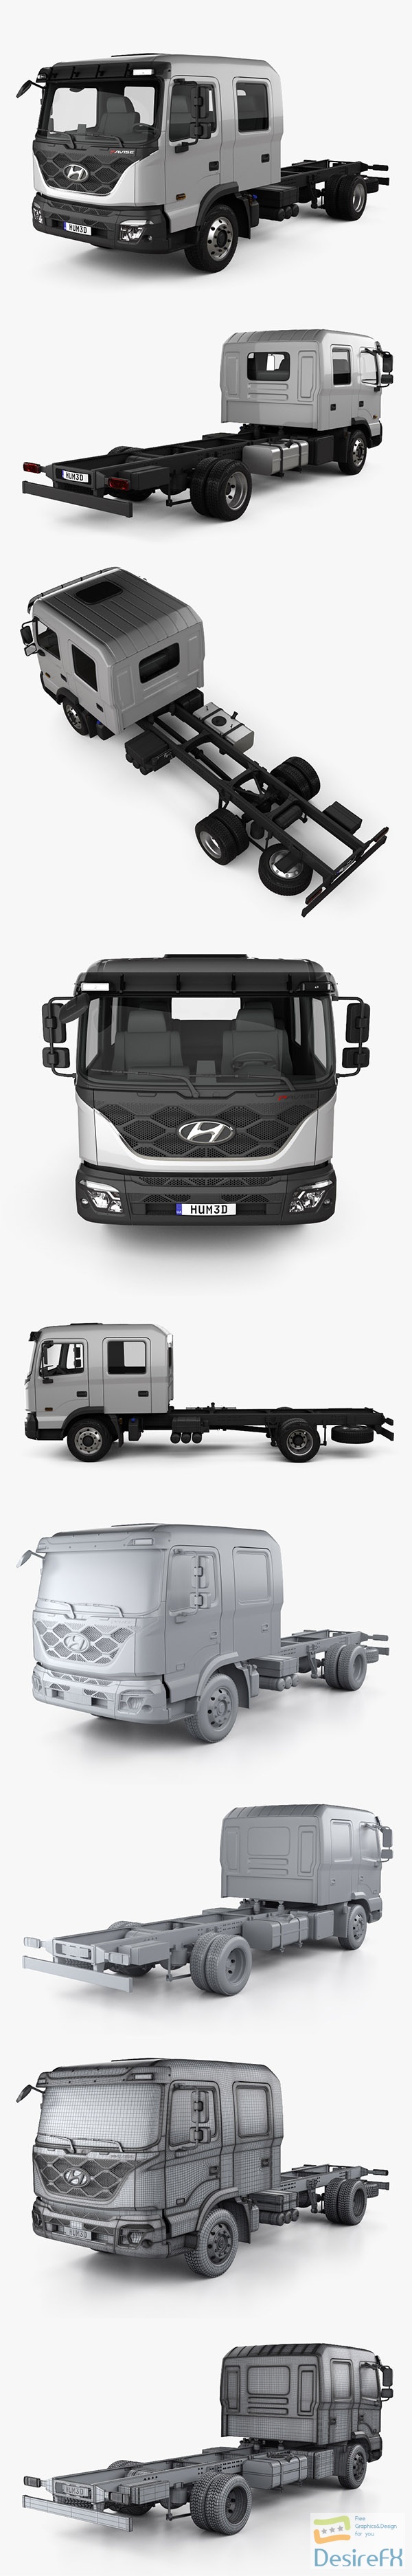 Hyundai Pavise Double Cab Chassis Truck 2019 3D Model